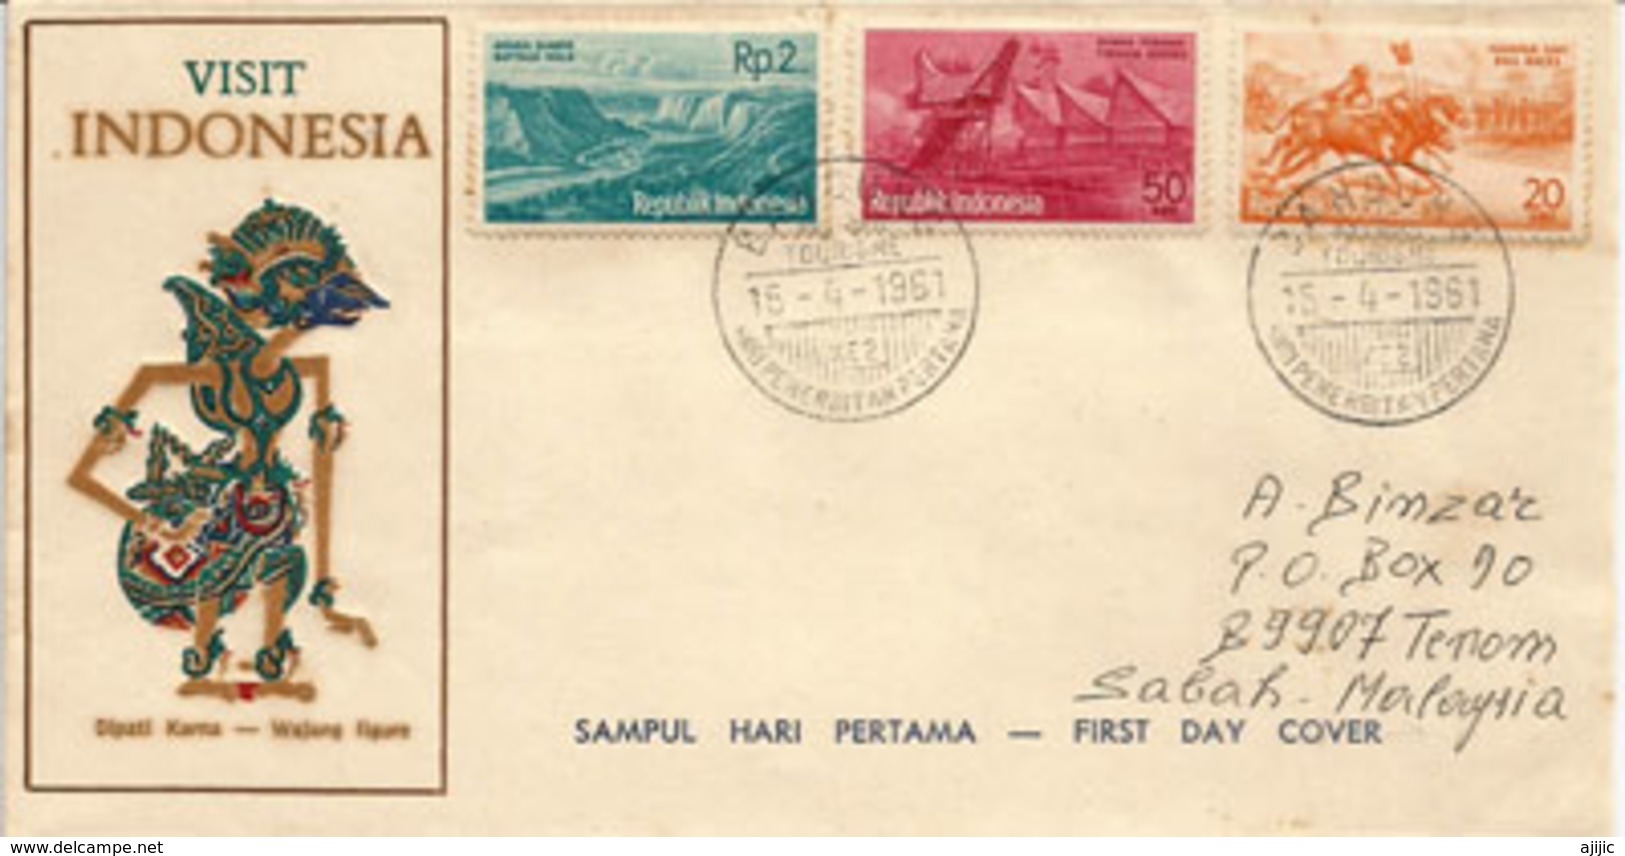 Visit Indonesia 1961.Hindu Sun God Karna., FDC Letter Bandung.Indonesia, Addressed To Sabah.Malaysia - Hinduism